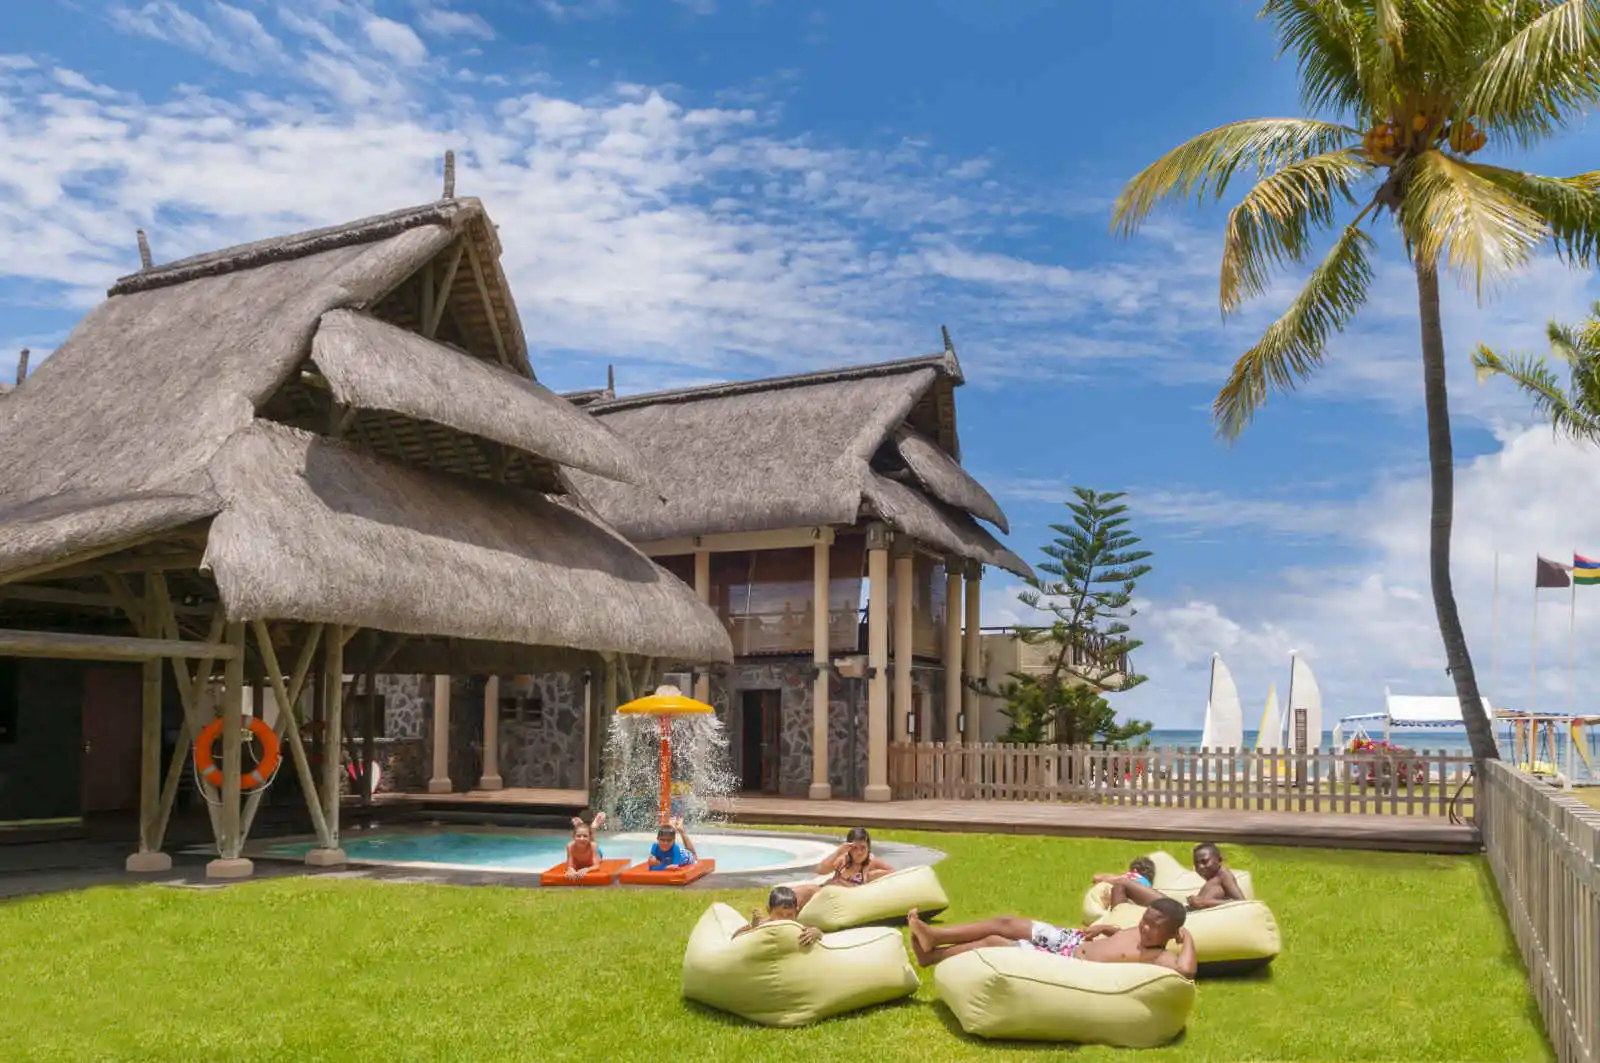 Club enfants, Sofitel Mauritius Imperial Resort and Spa, Flic en Flac, Île Maurice